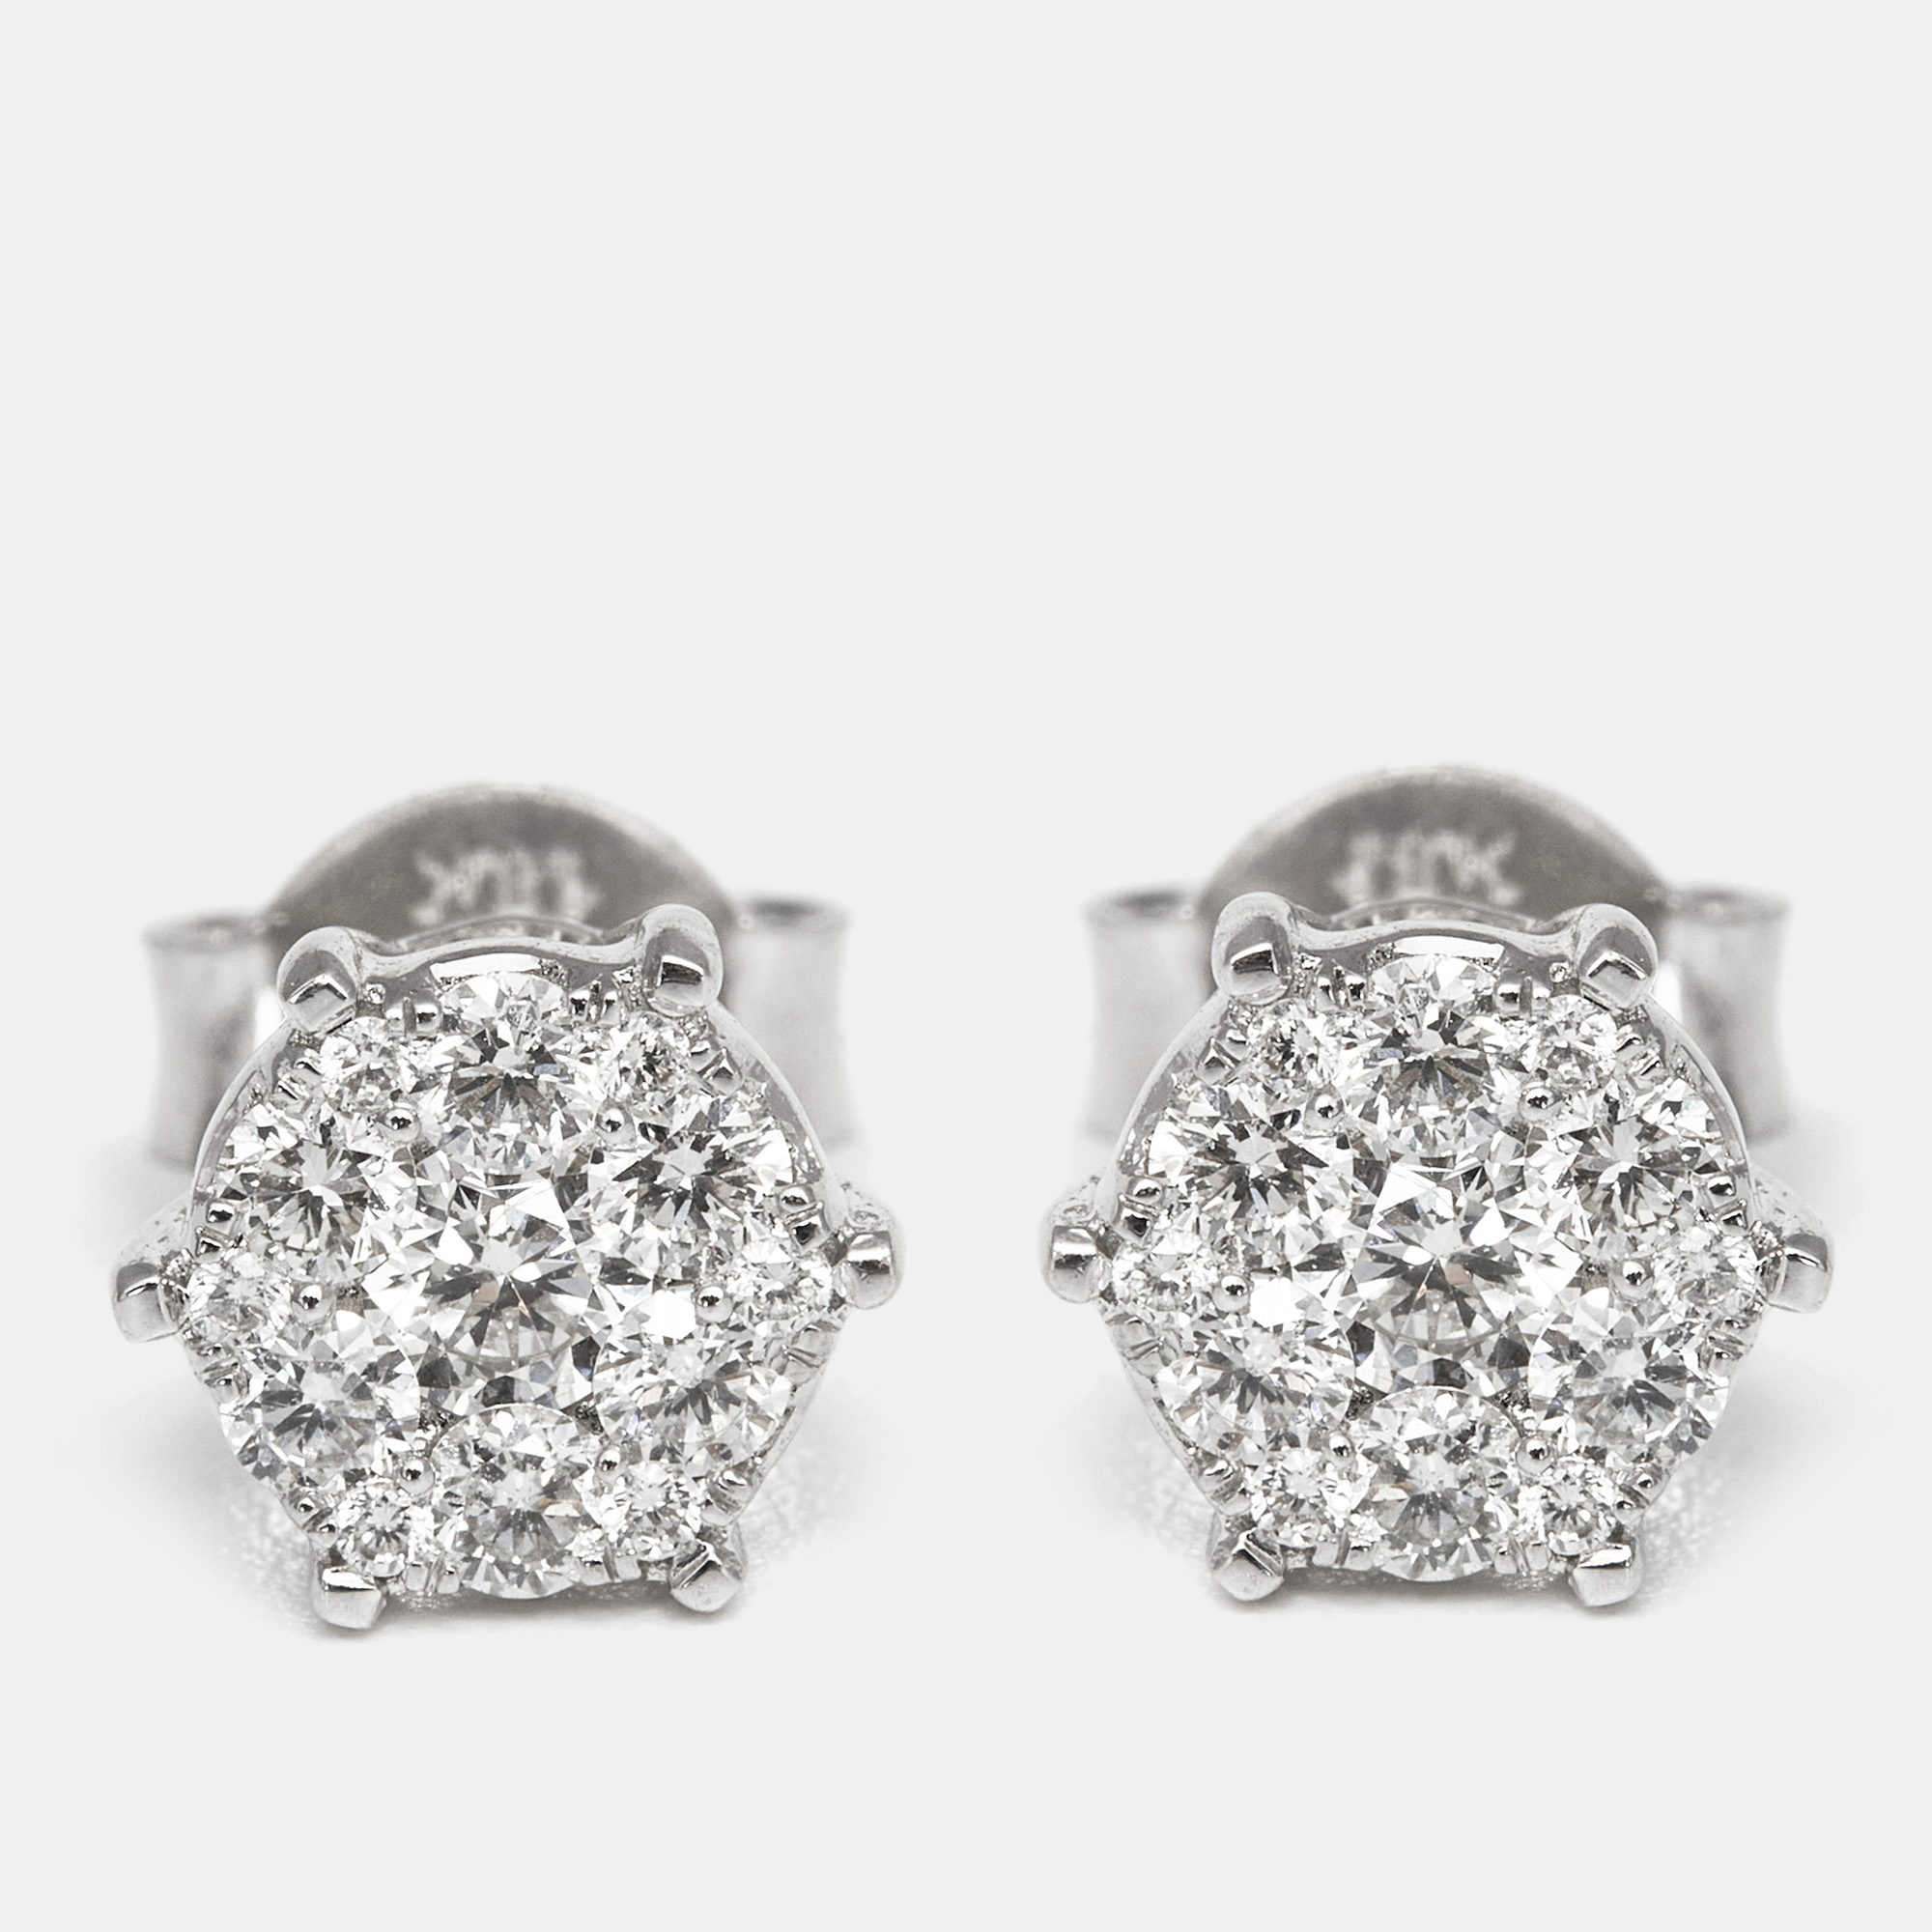 The diamond edit round 18k white gold diamond 0.49 ct stud earrings